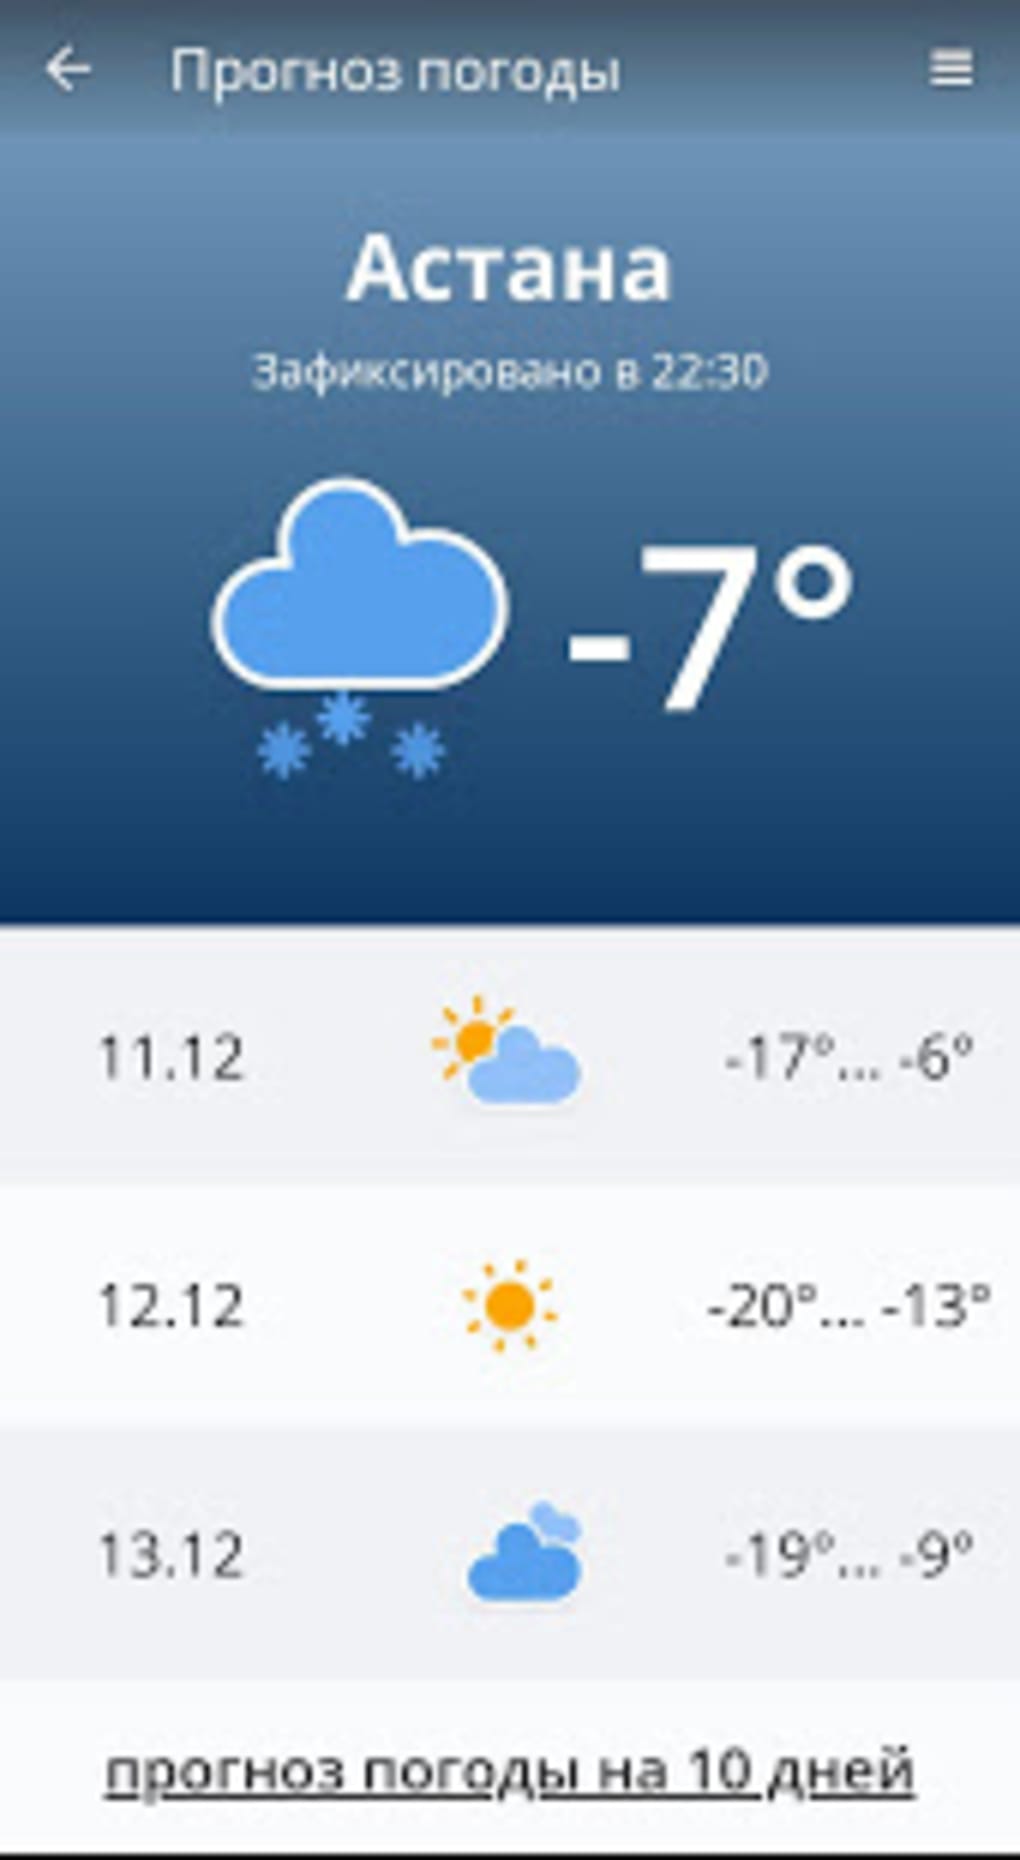 Астана погода какая. Астана погода. Астана погода сегодня. Астана Казахстан погода. Погода в Астане сейчас.